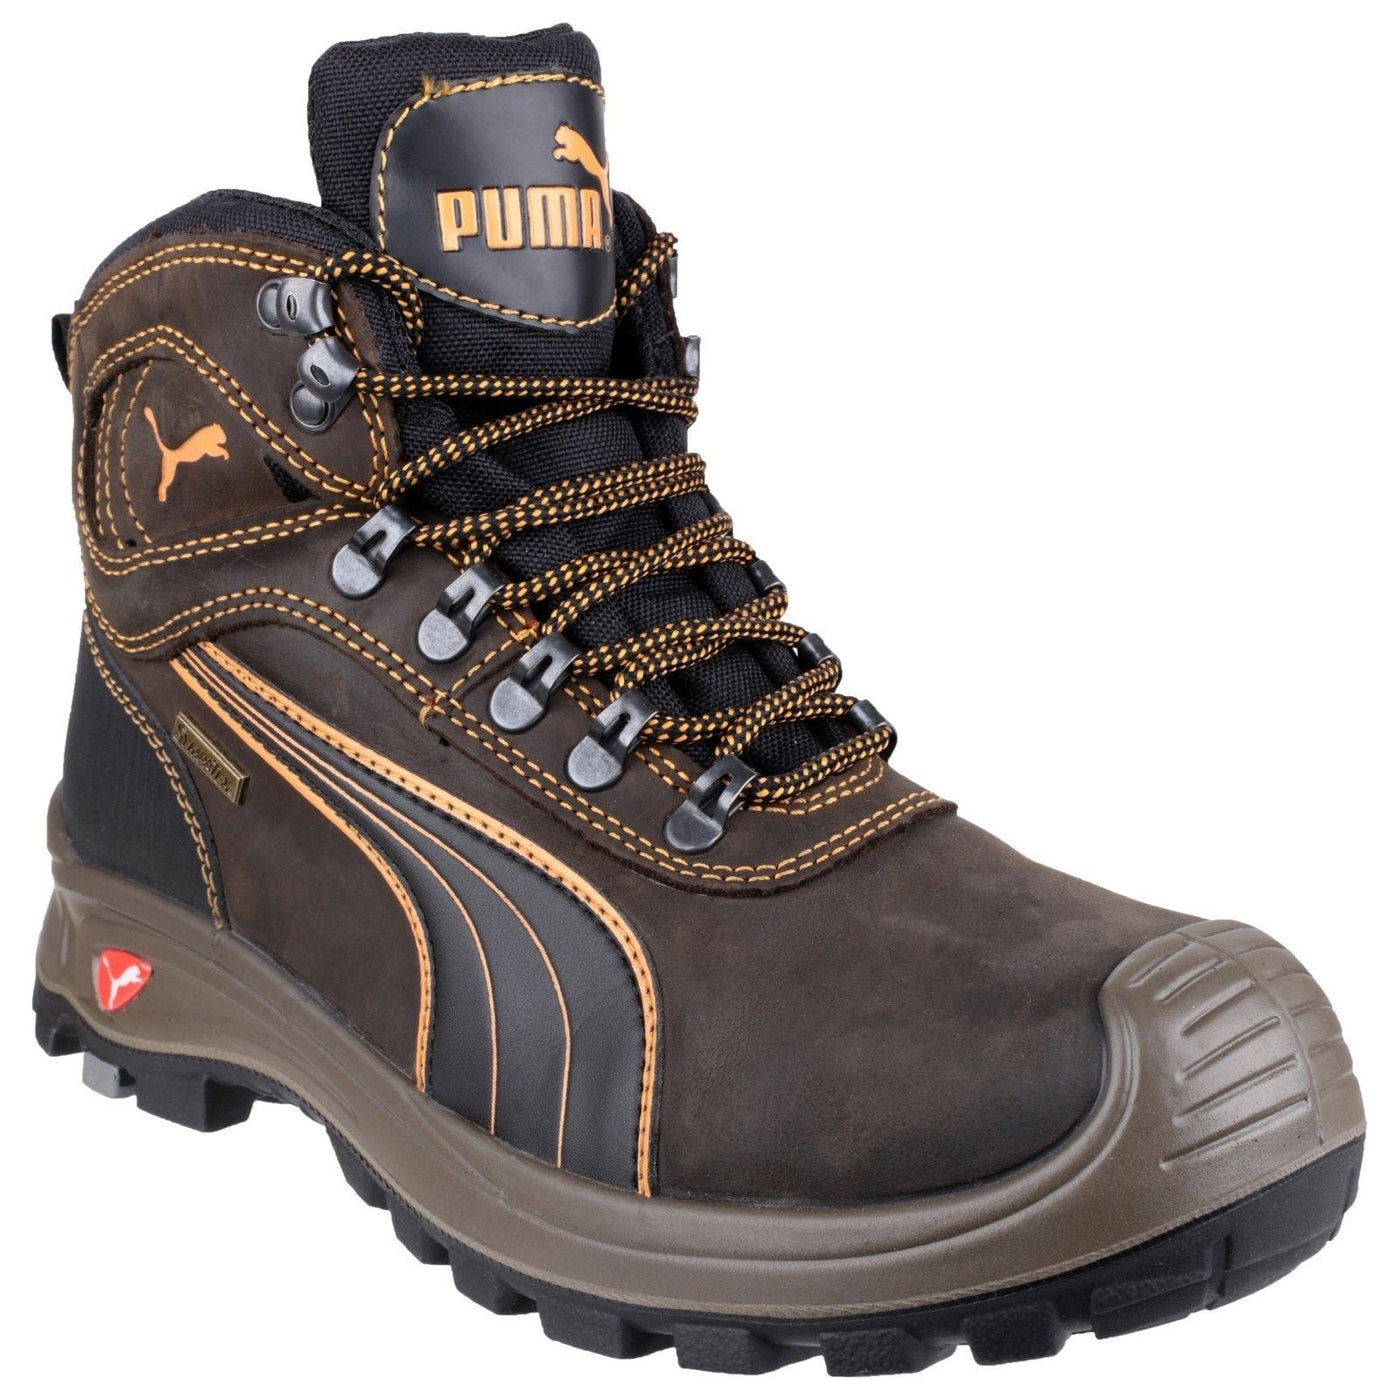 Puma Sierra Nevada Safety Boots Mens